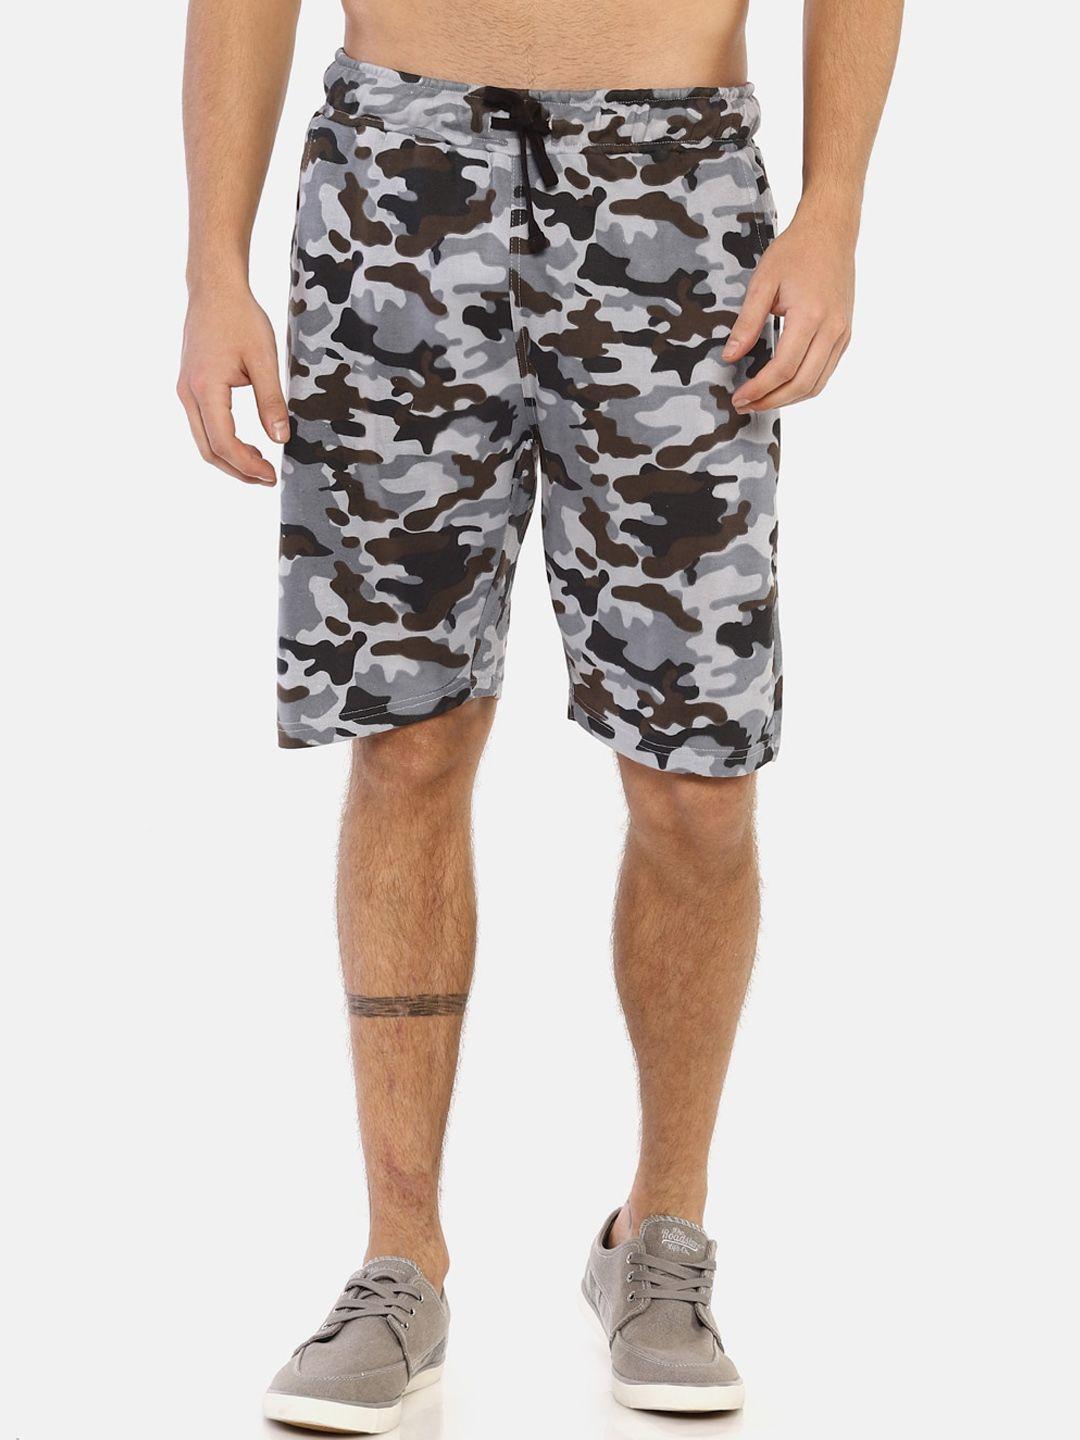 Masculino Latino Men Camouflage Printed Cotton Shorts